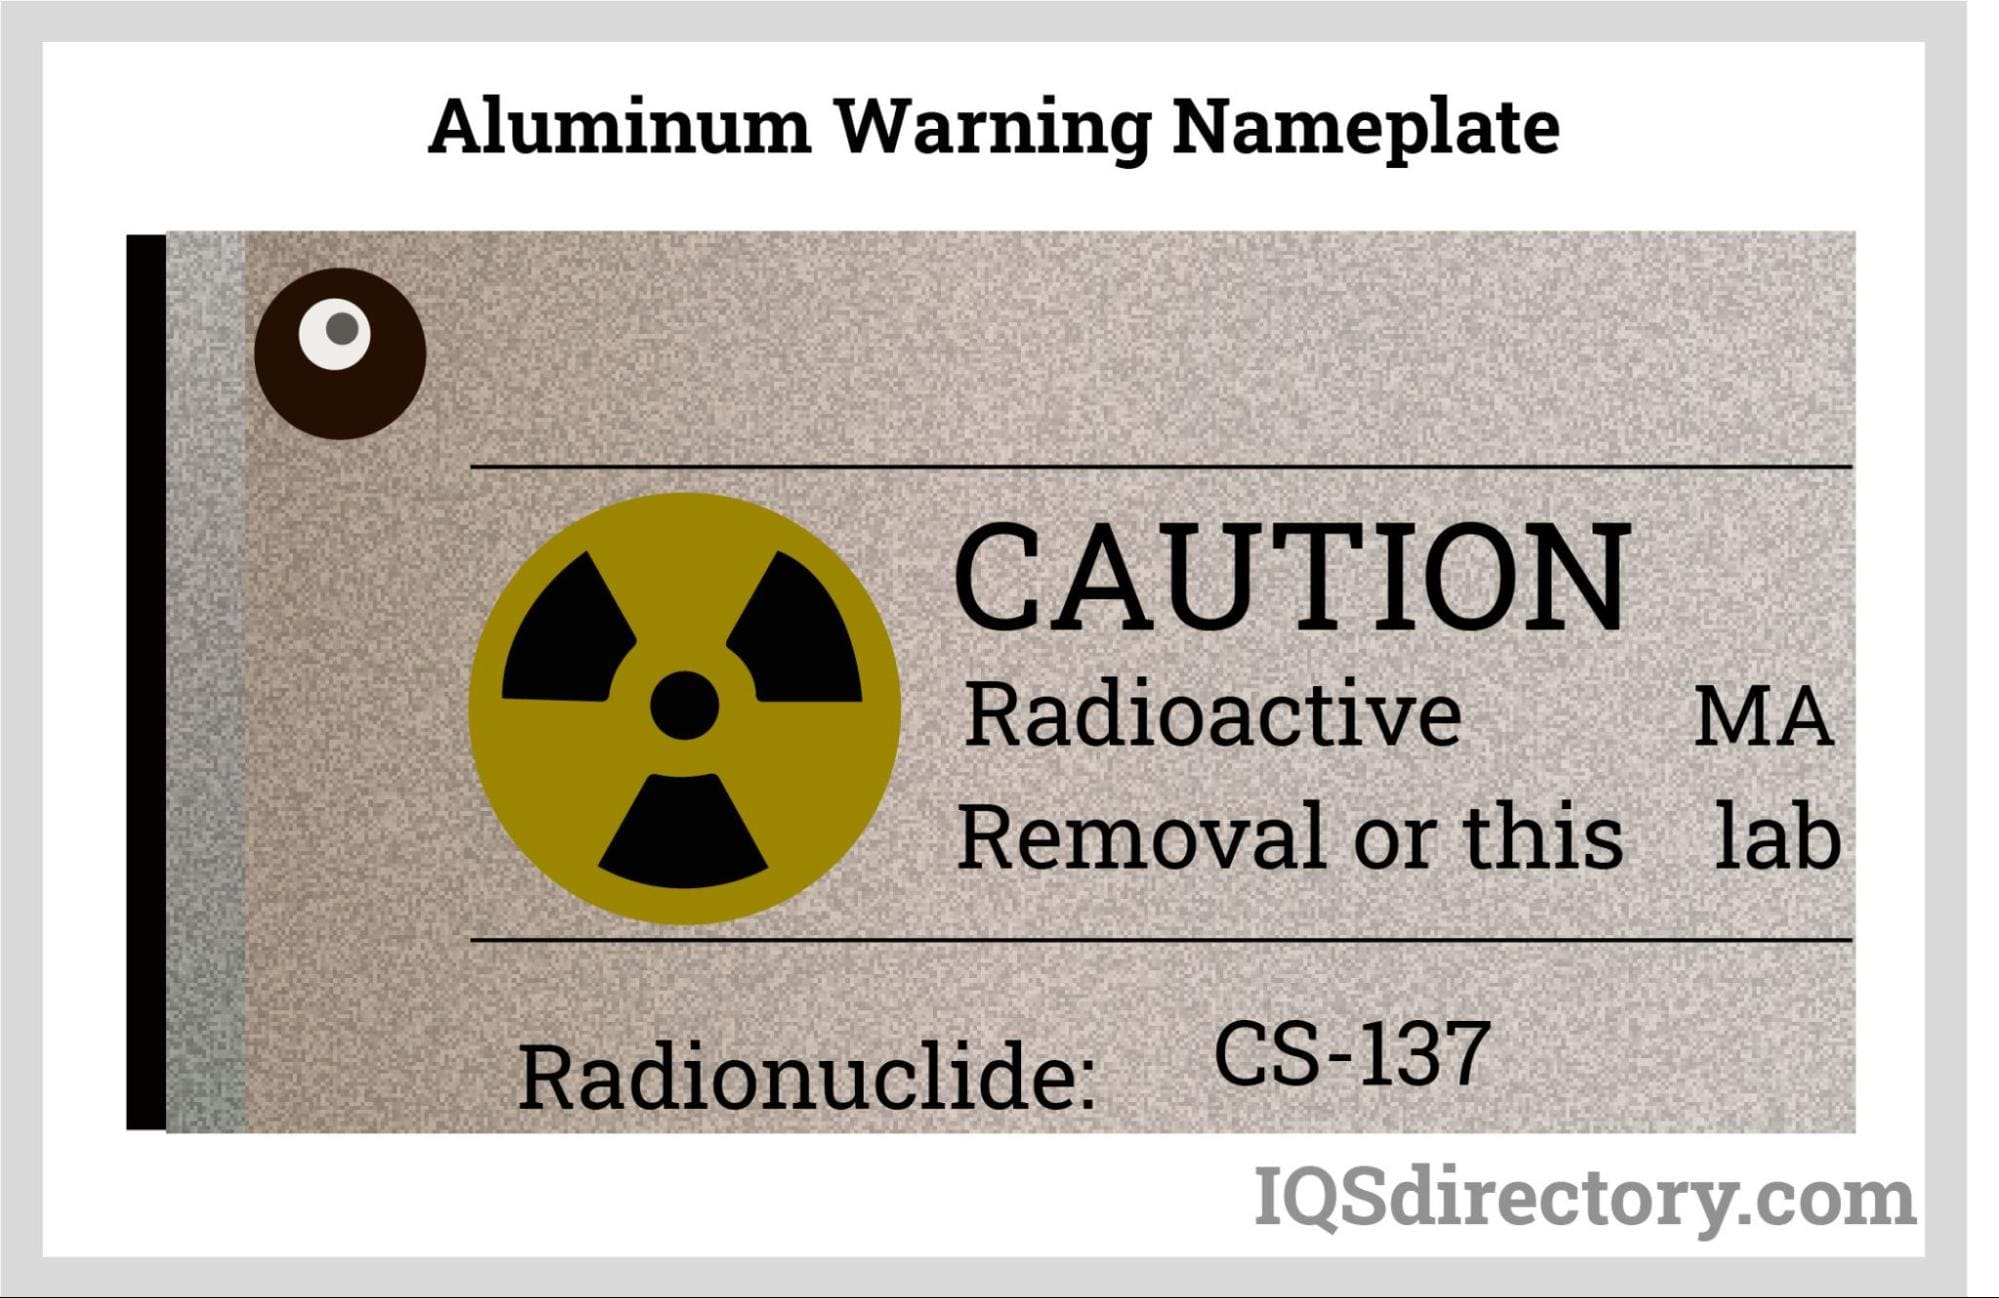 Aluminum Warning Nameplate